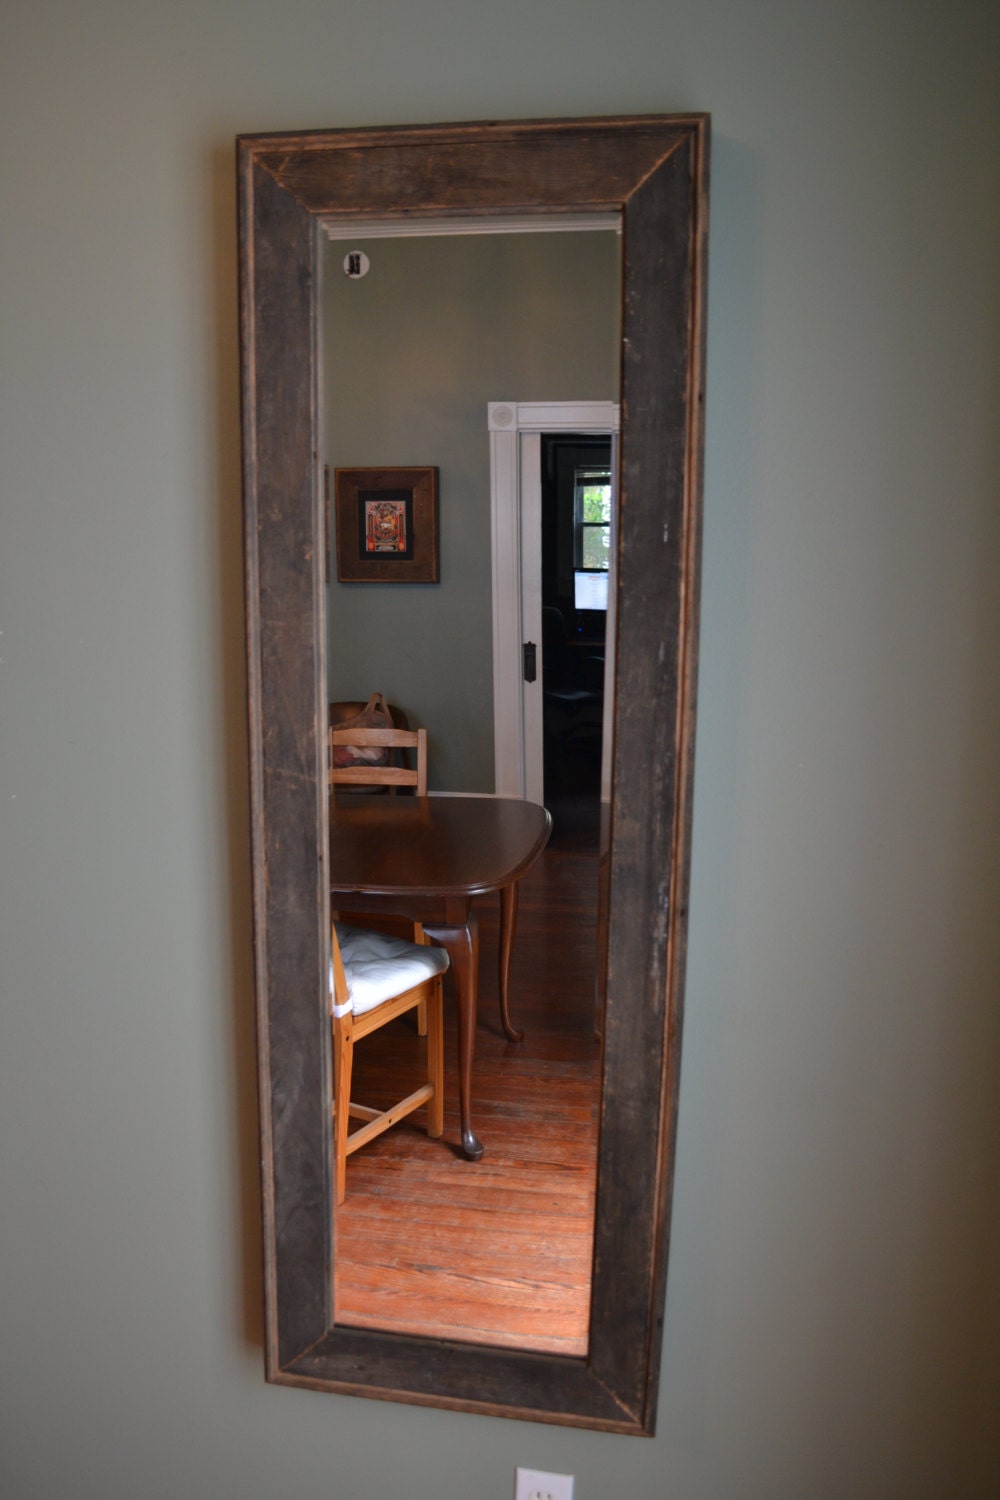 53"x17" Reclaimed wood full length mirror (dimensions include frame) - EasyMoneyStudios